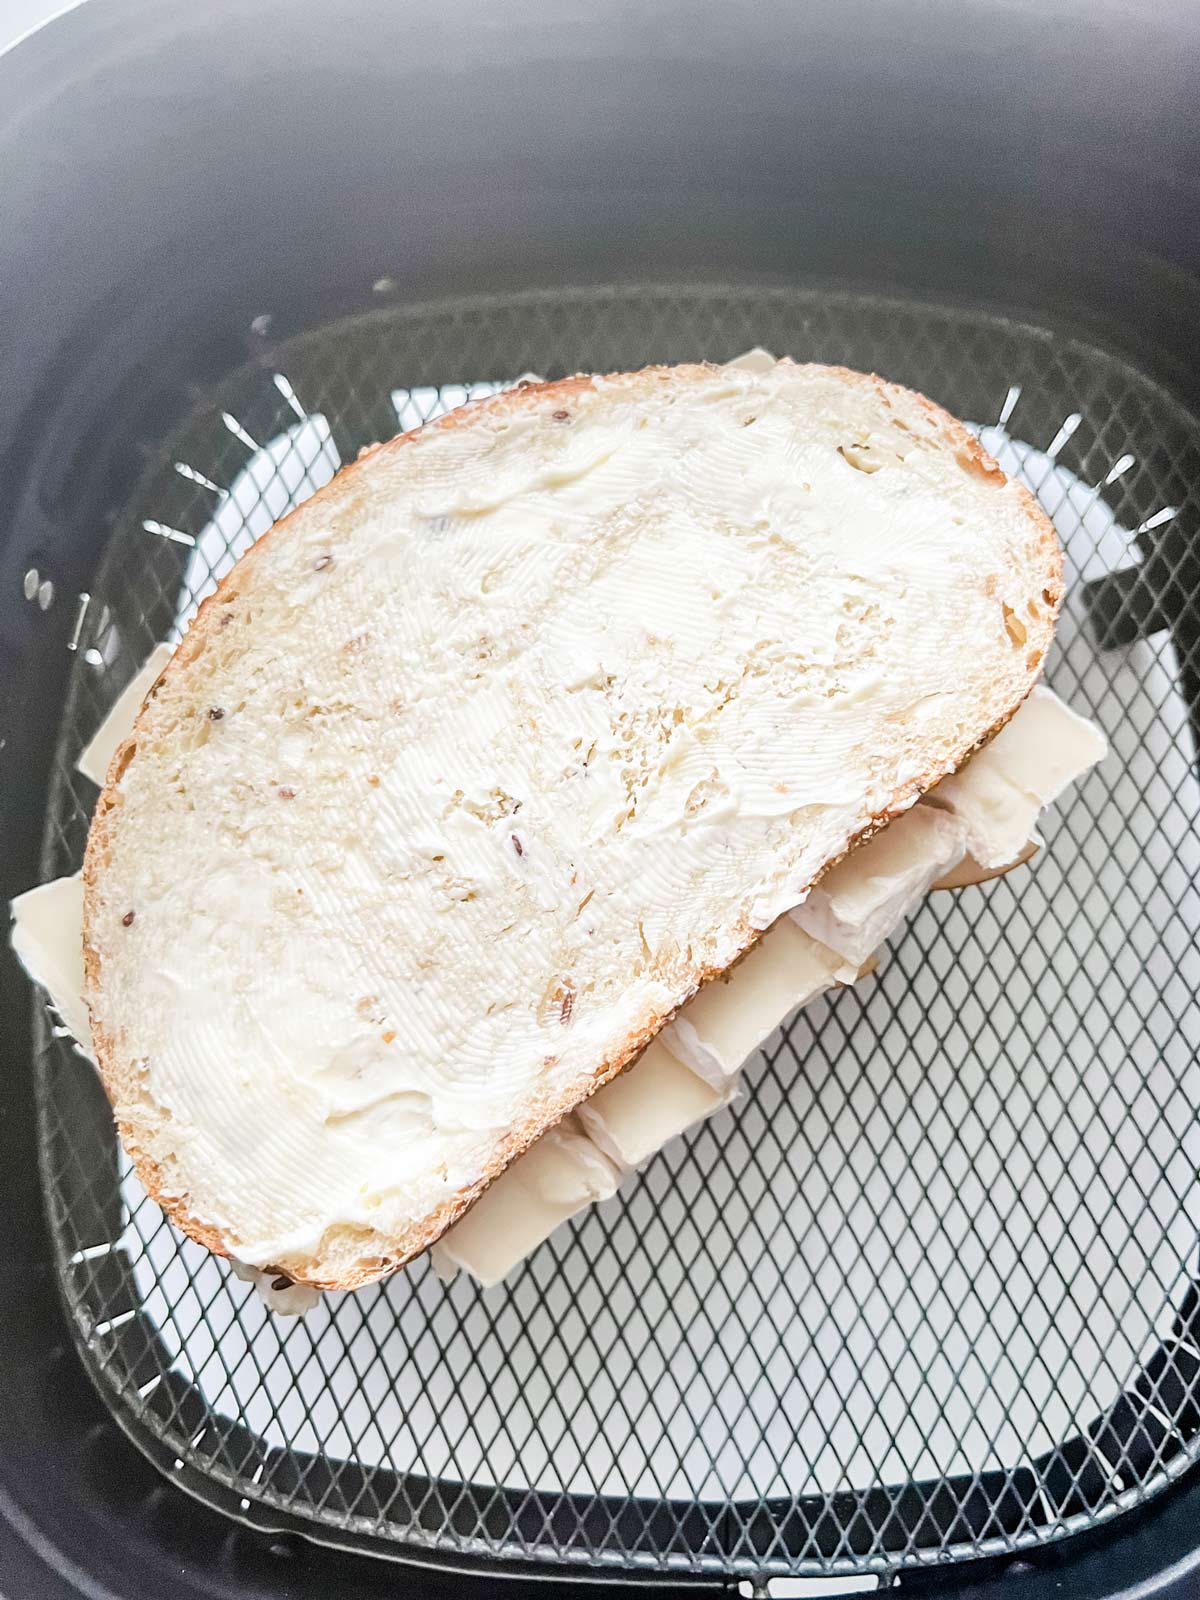 An apple brie sandwich in an air fryer basket.